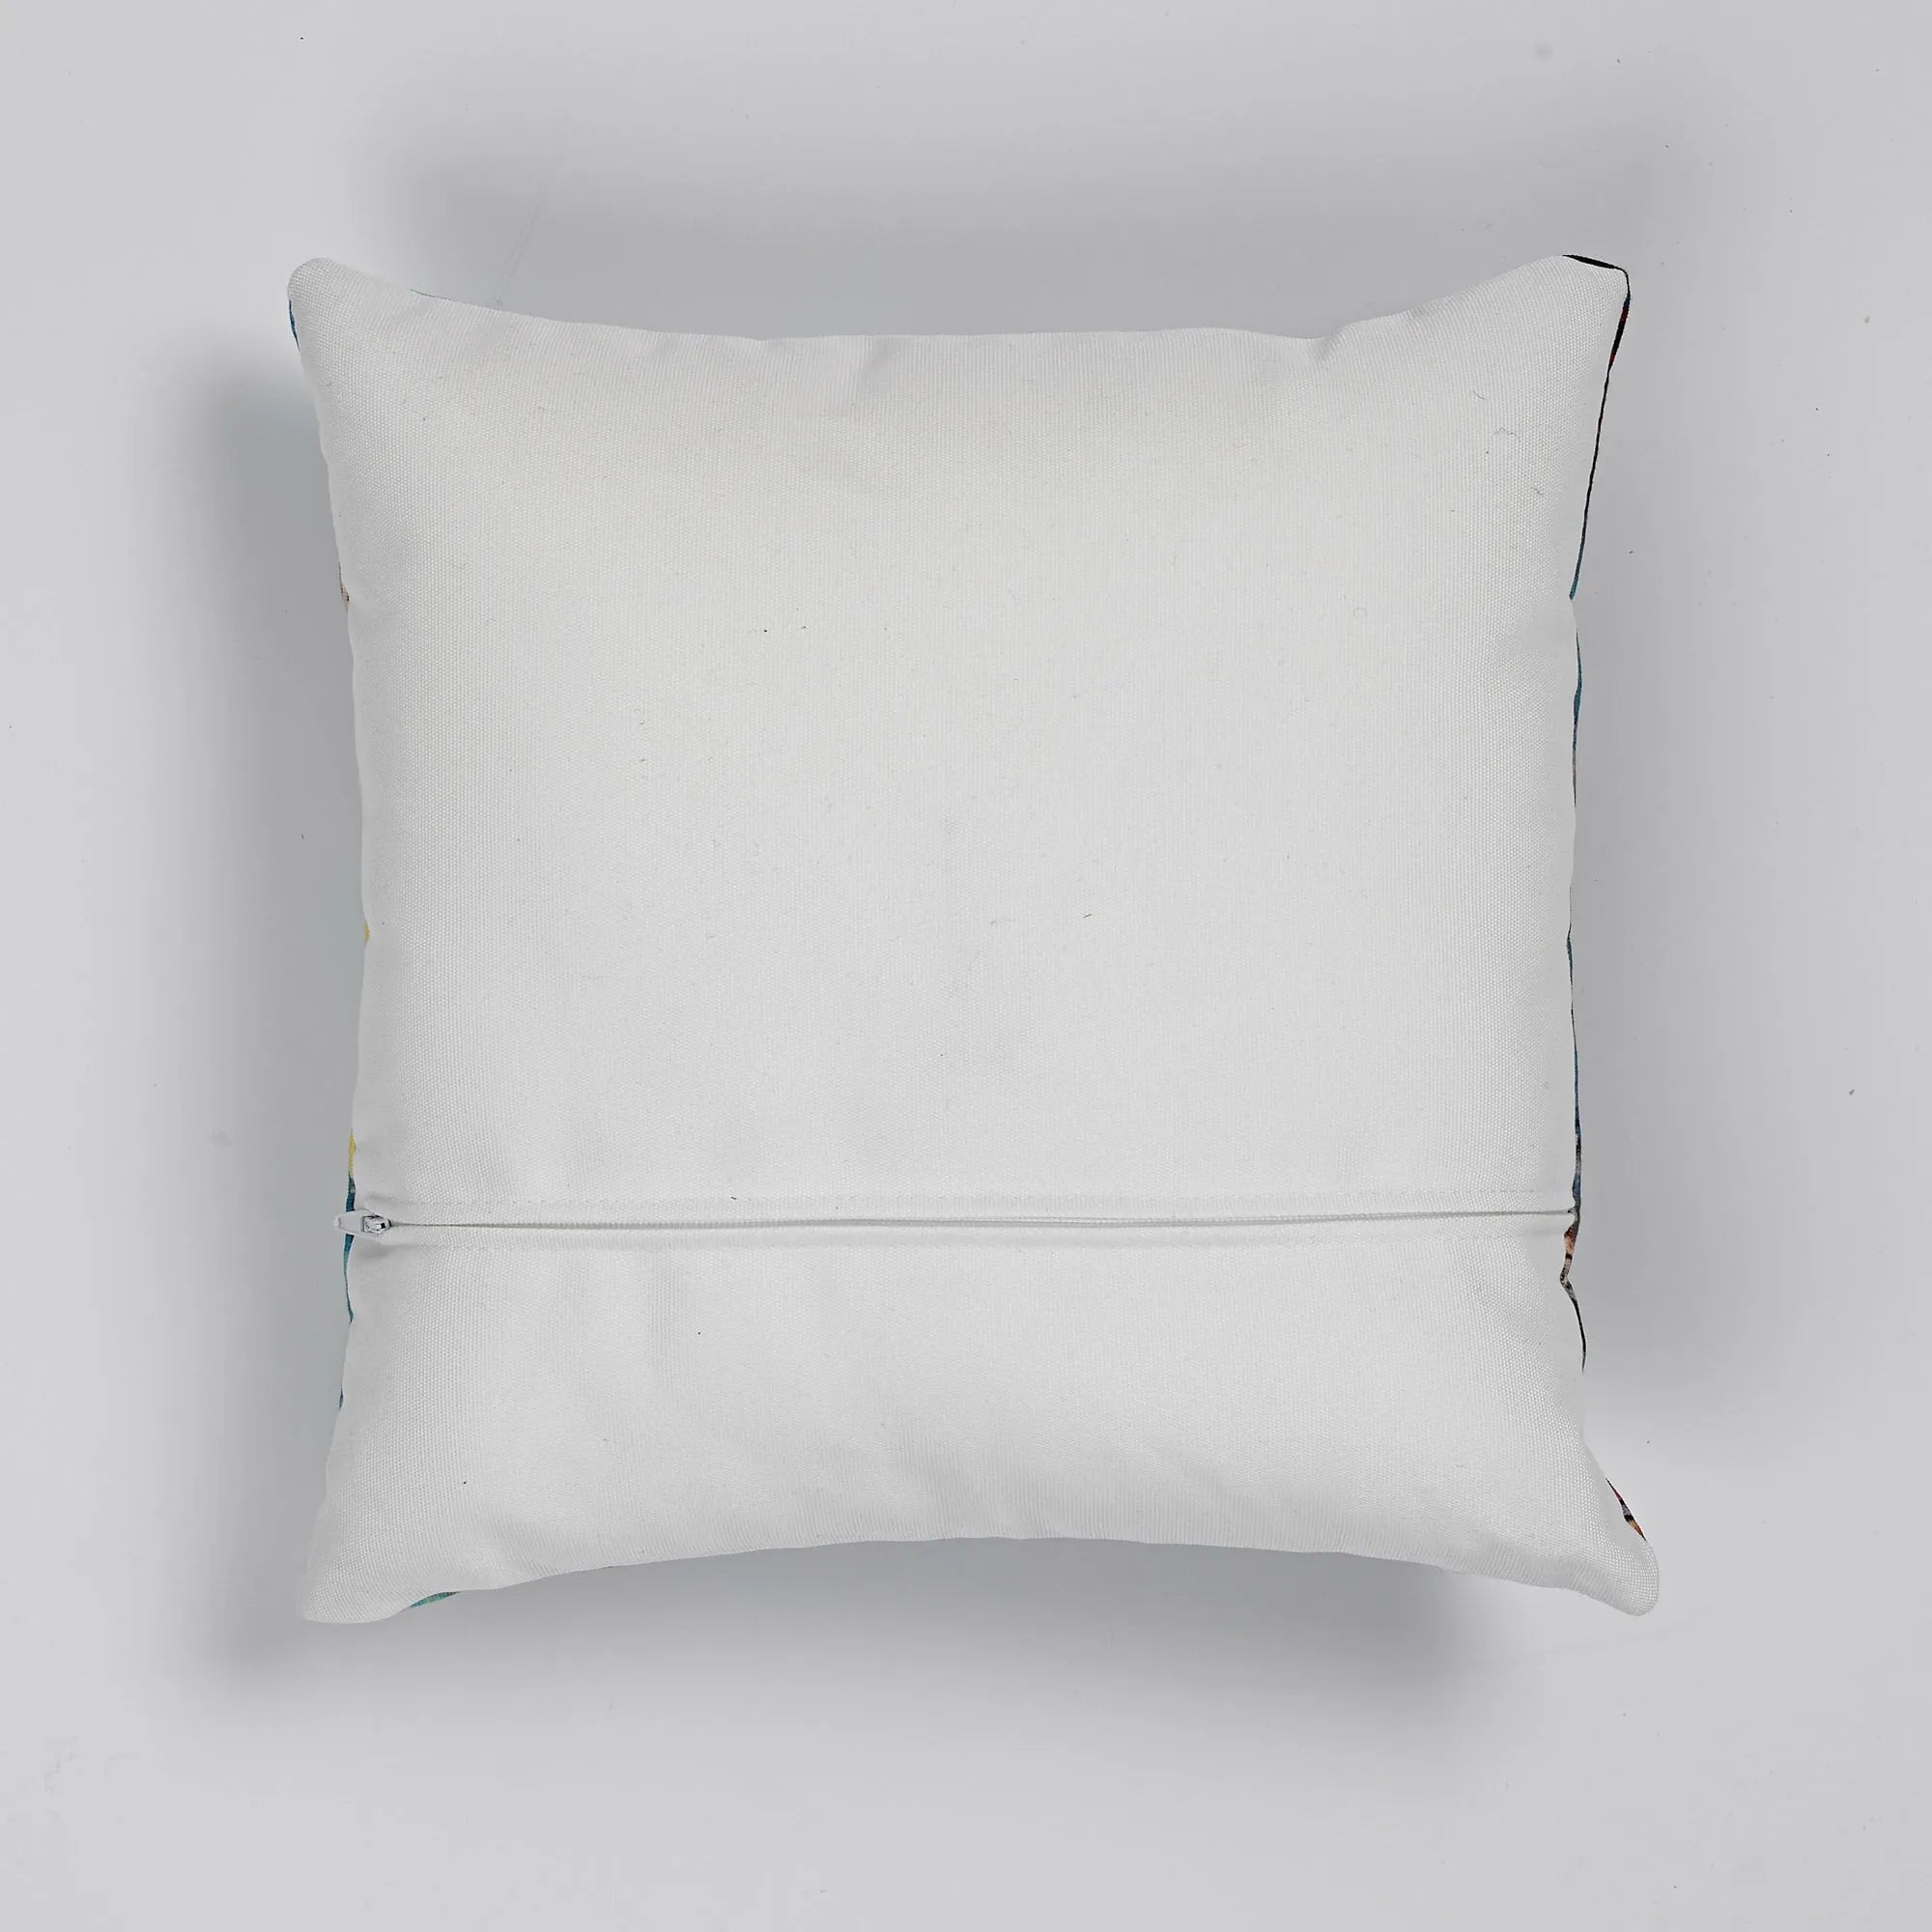 Lady In Waiting Cushion - Decorative Throw Pillow - Throw Pillows - Aesthetic Art